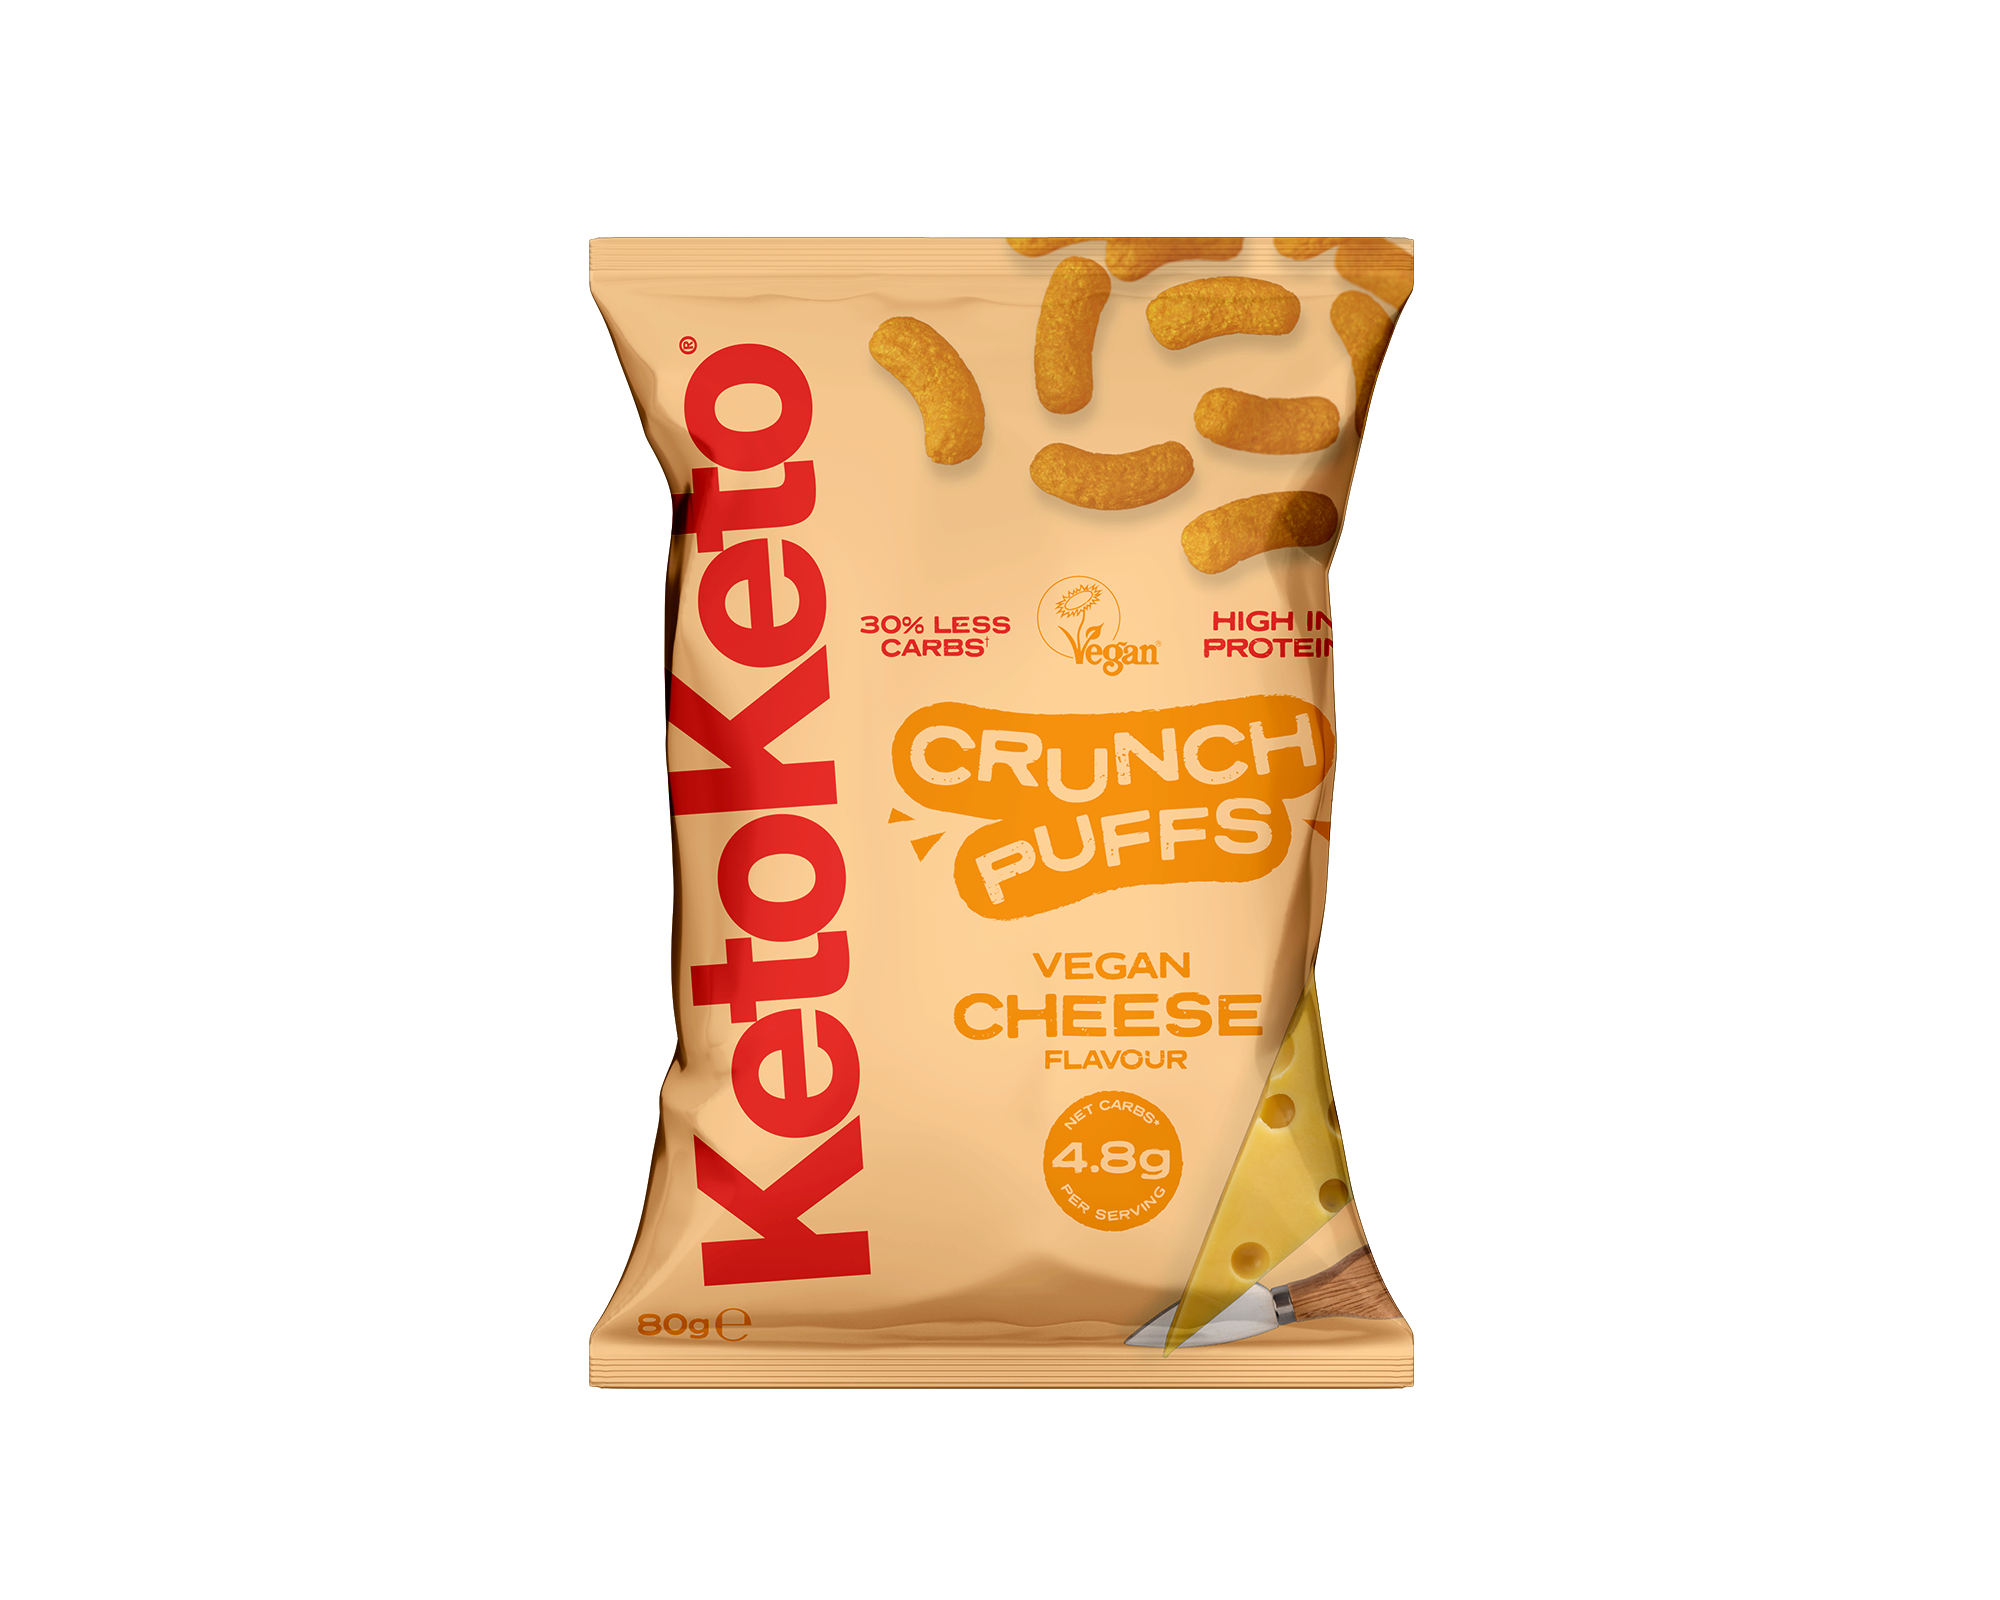 Vegan Cheese Crunch Puffs 80g pack